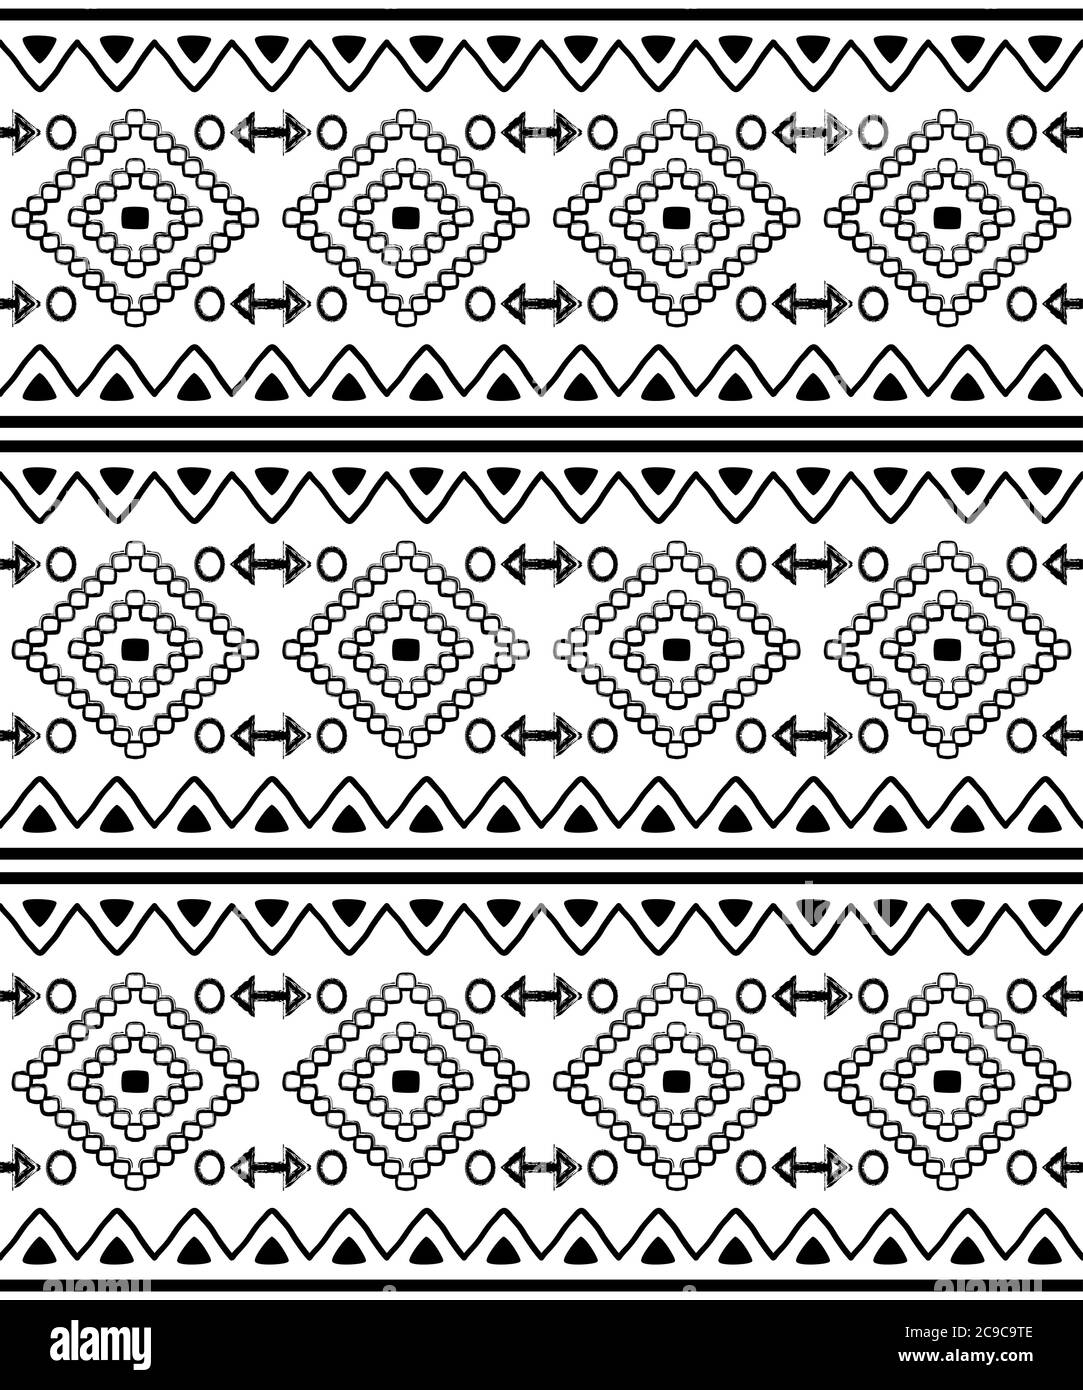 Aztec Navajo geometric seamless ethnic vector pattern, retro  repetitive design in black pattern on white background Stock Vector